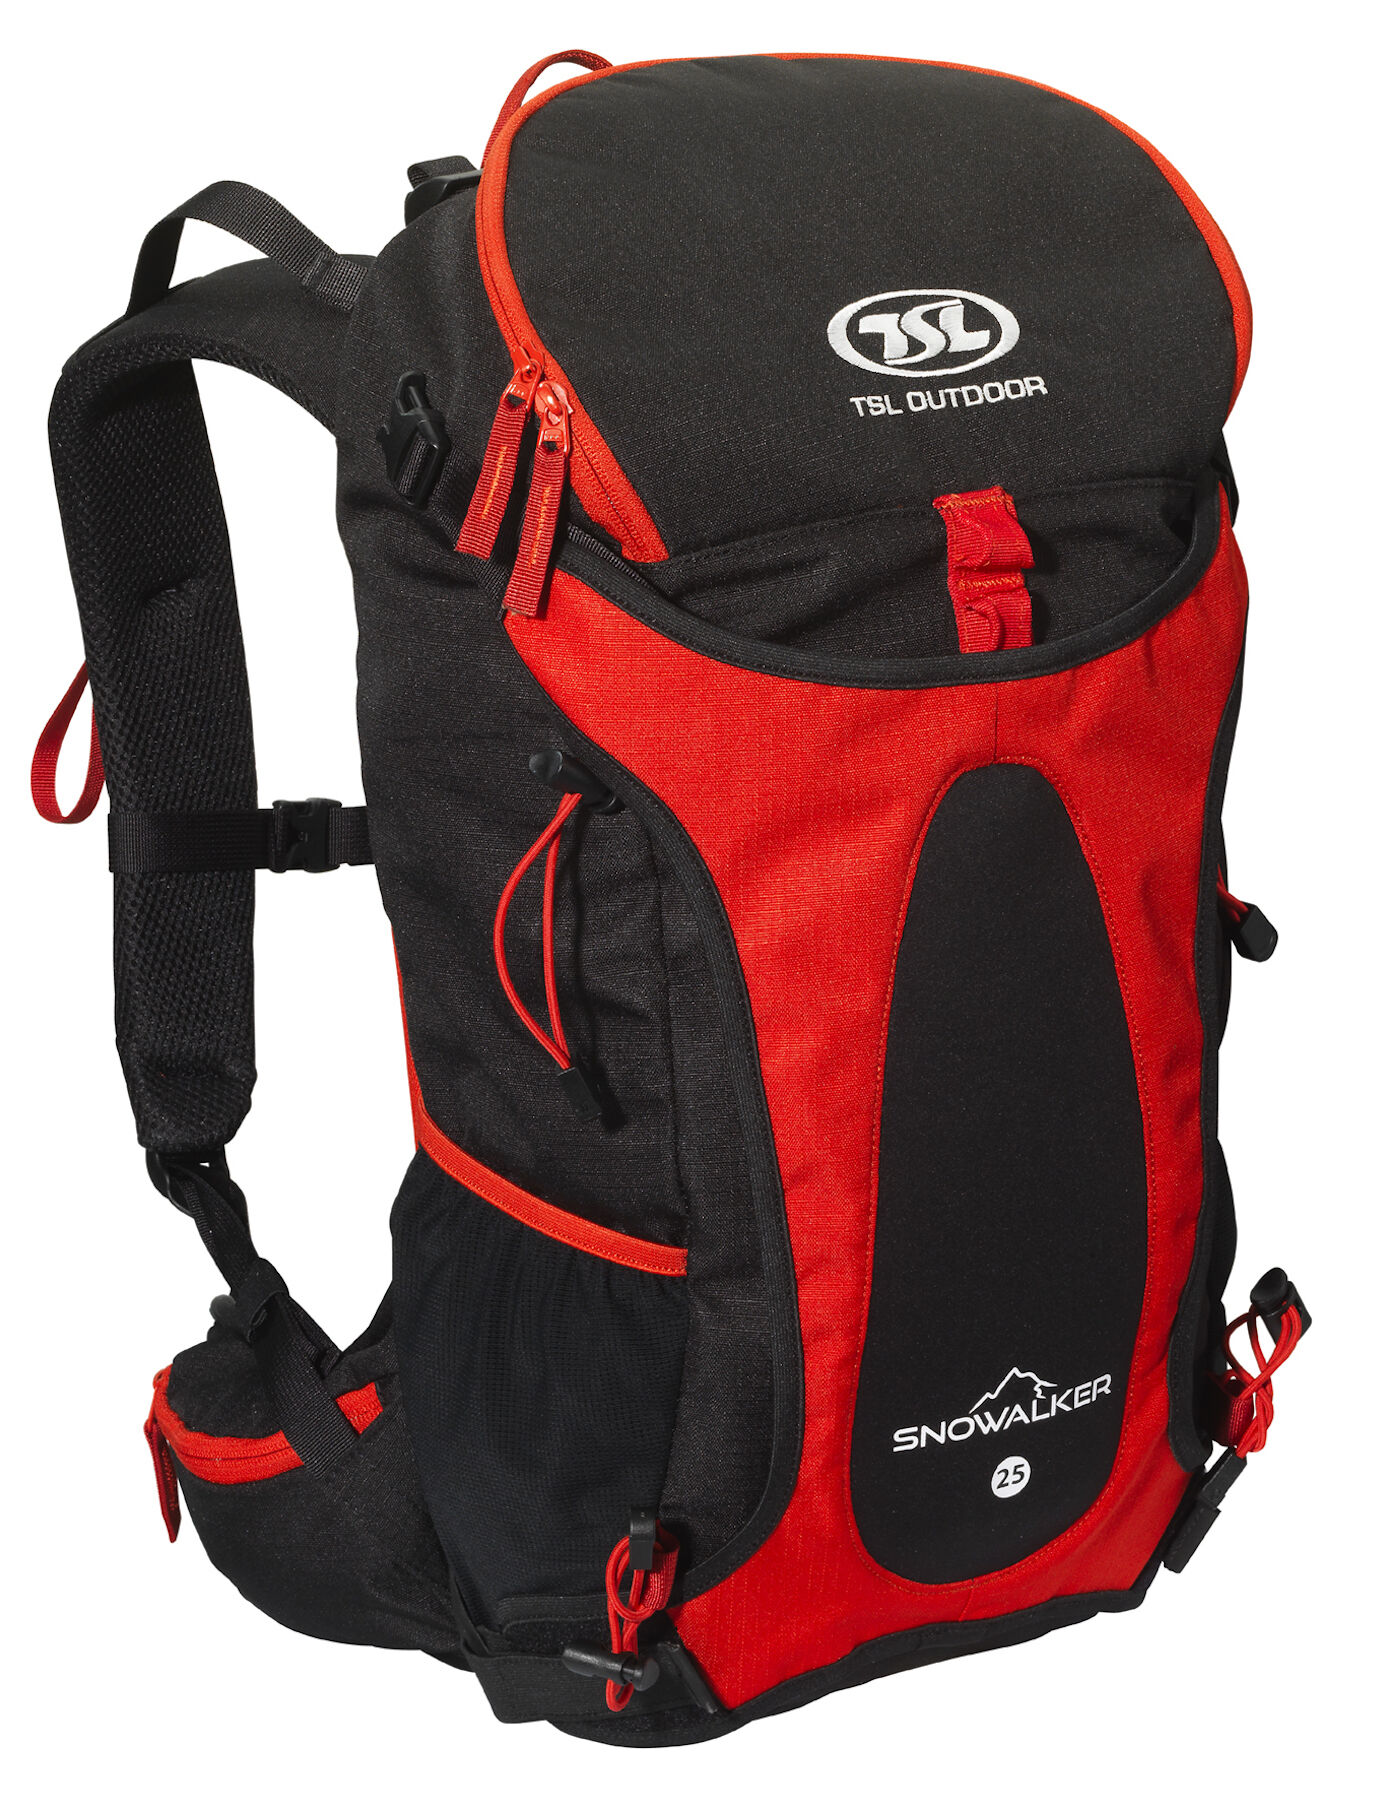 TSL Outdoor - Snowalker 25 - Backpack